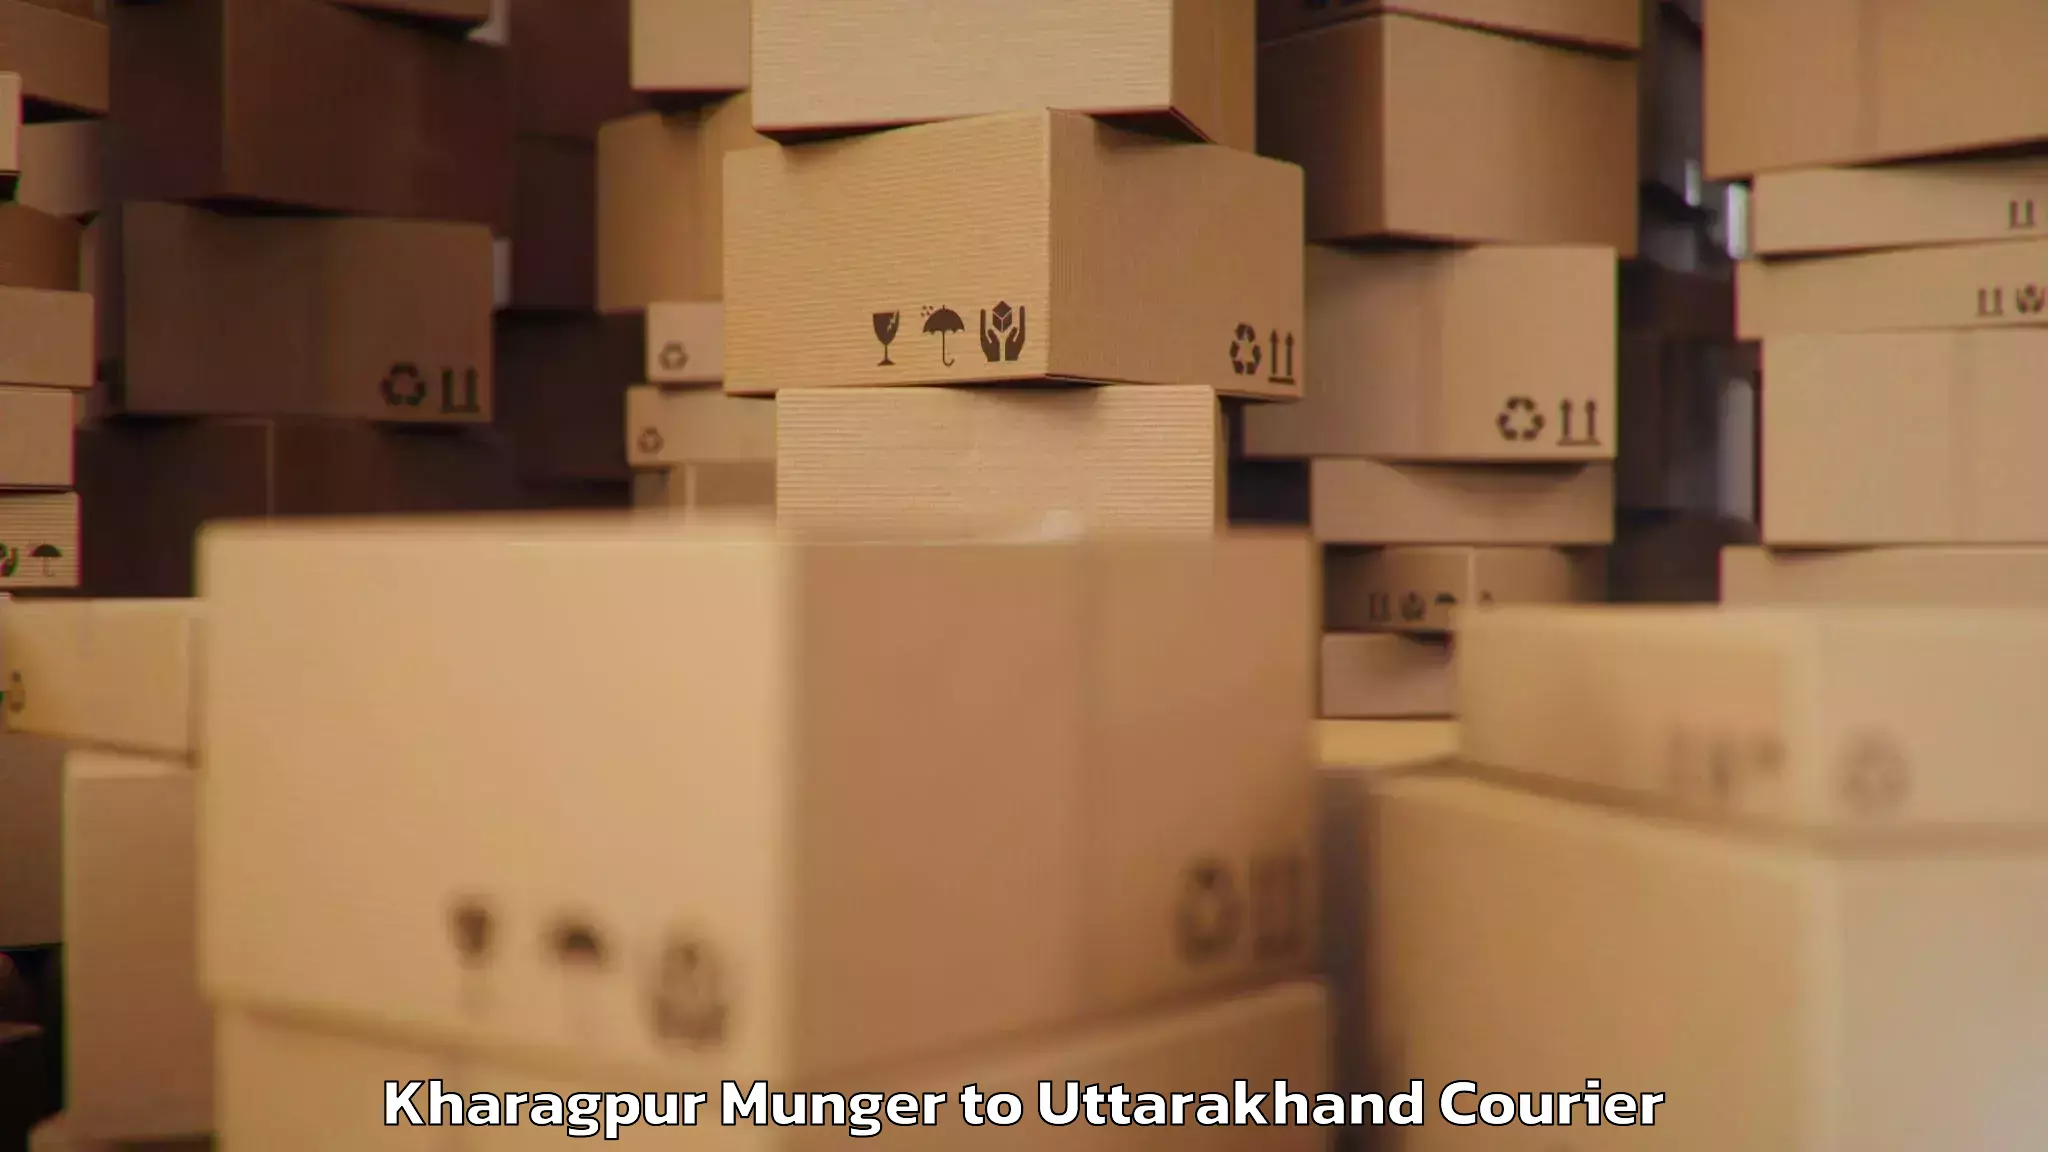 Baggage shipping advice Kharagpur Munger to Champawat